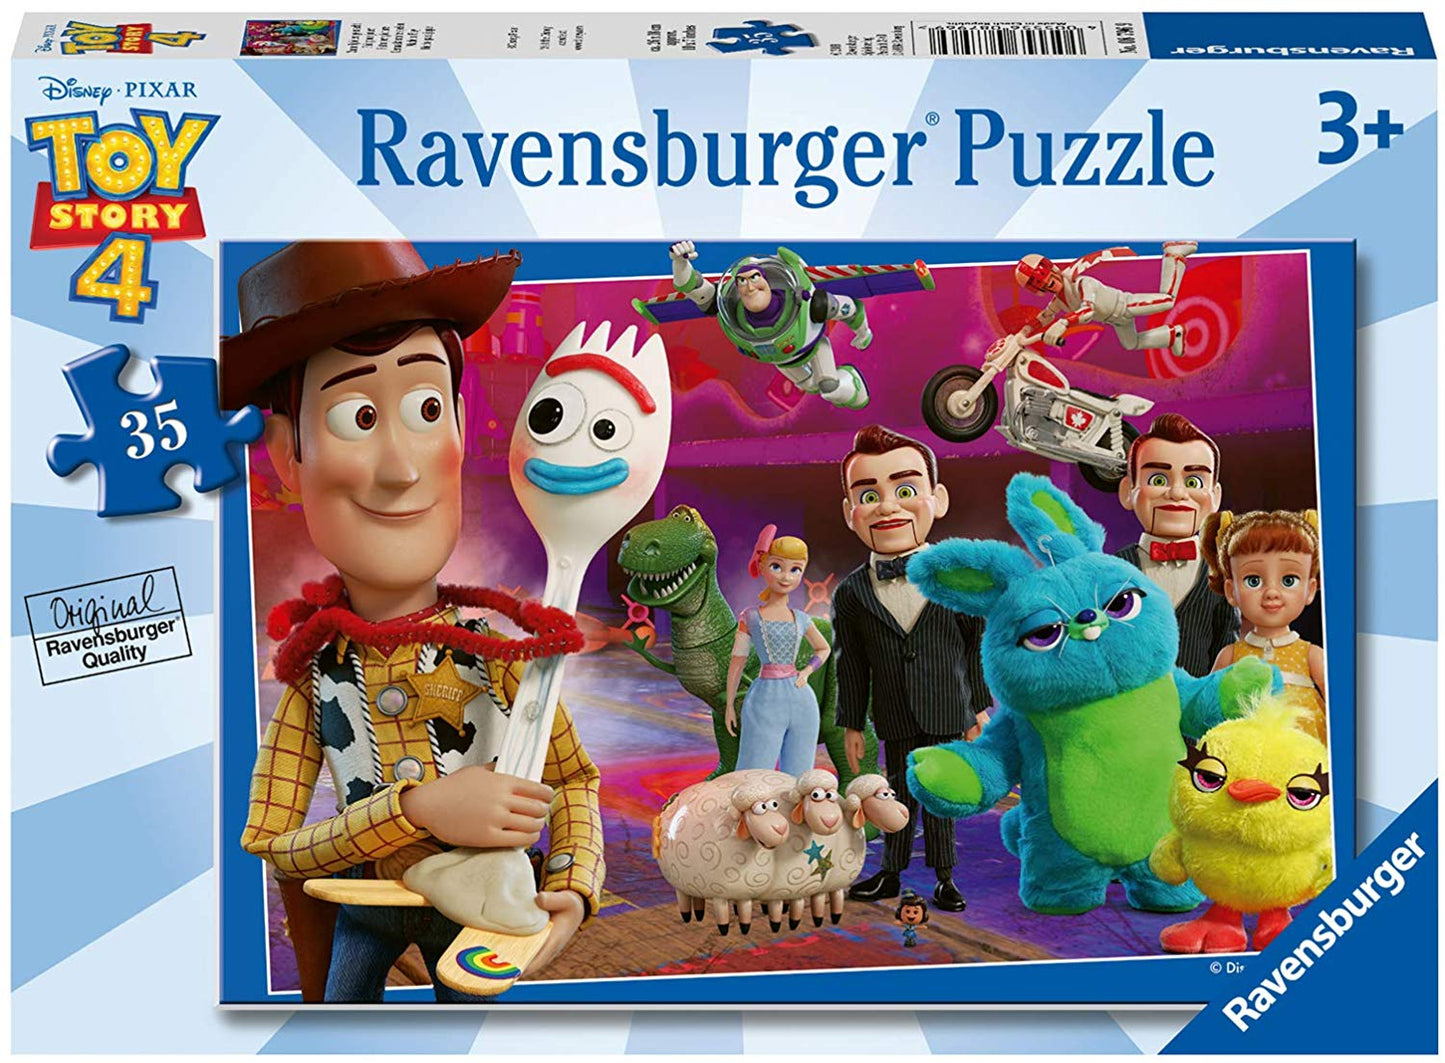 Ravensburger Disney Pixar Toy Story 4, 35pc Jigsaw Puzzle